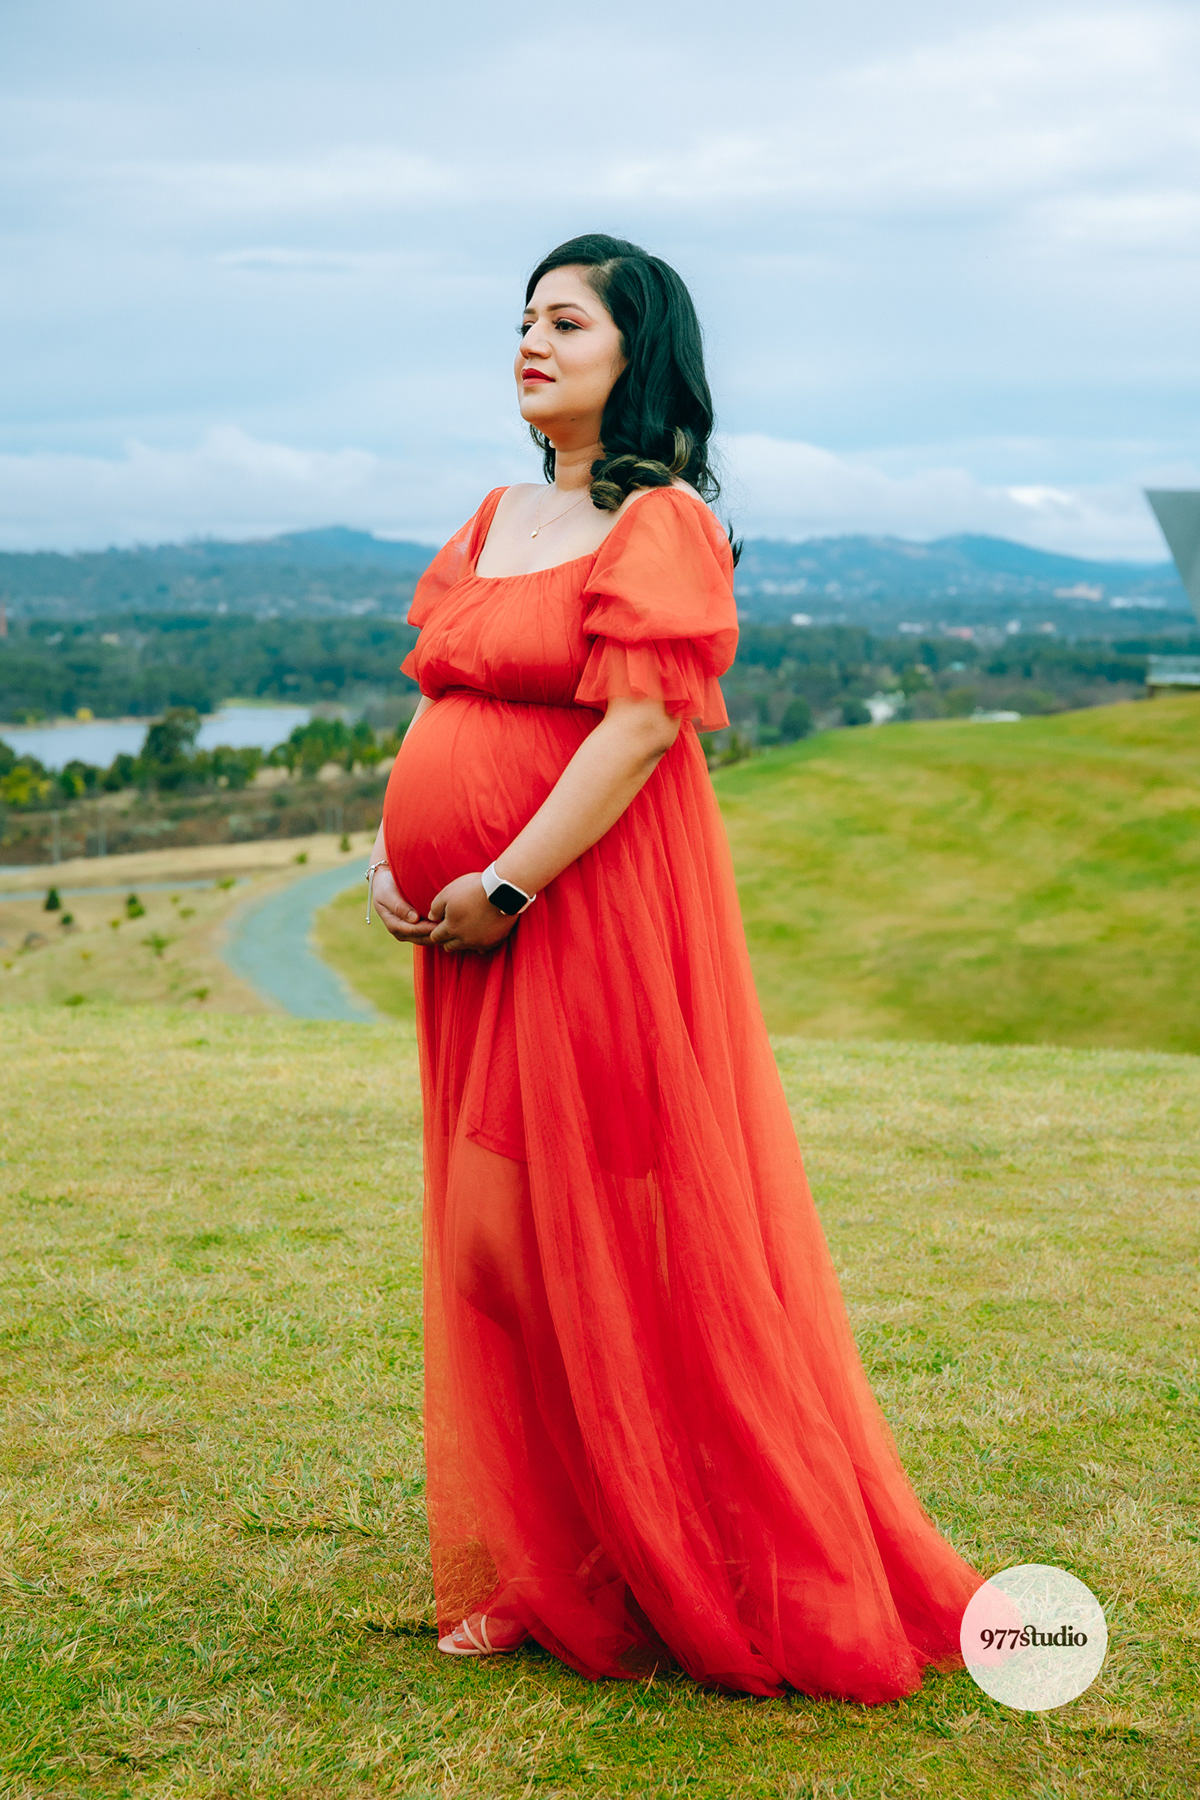 grass Outdoor maternity maternity photography photoshoot pregnancy portrait beauty family portrait